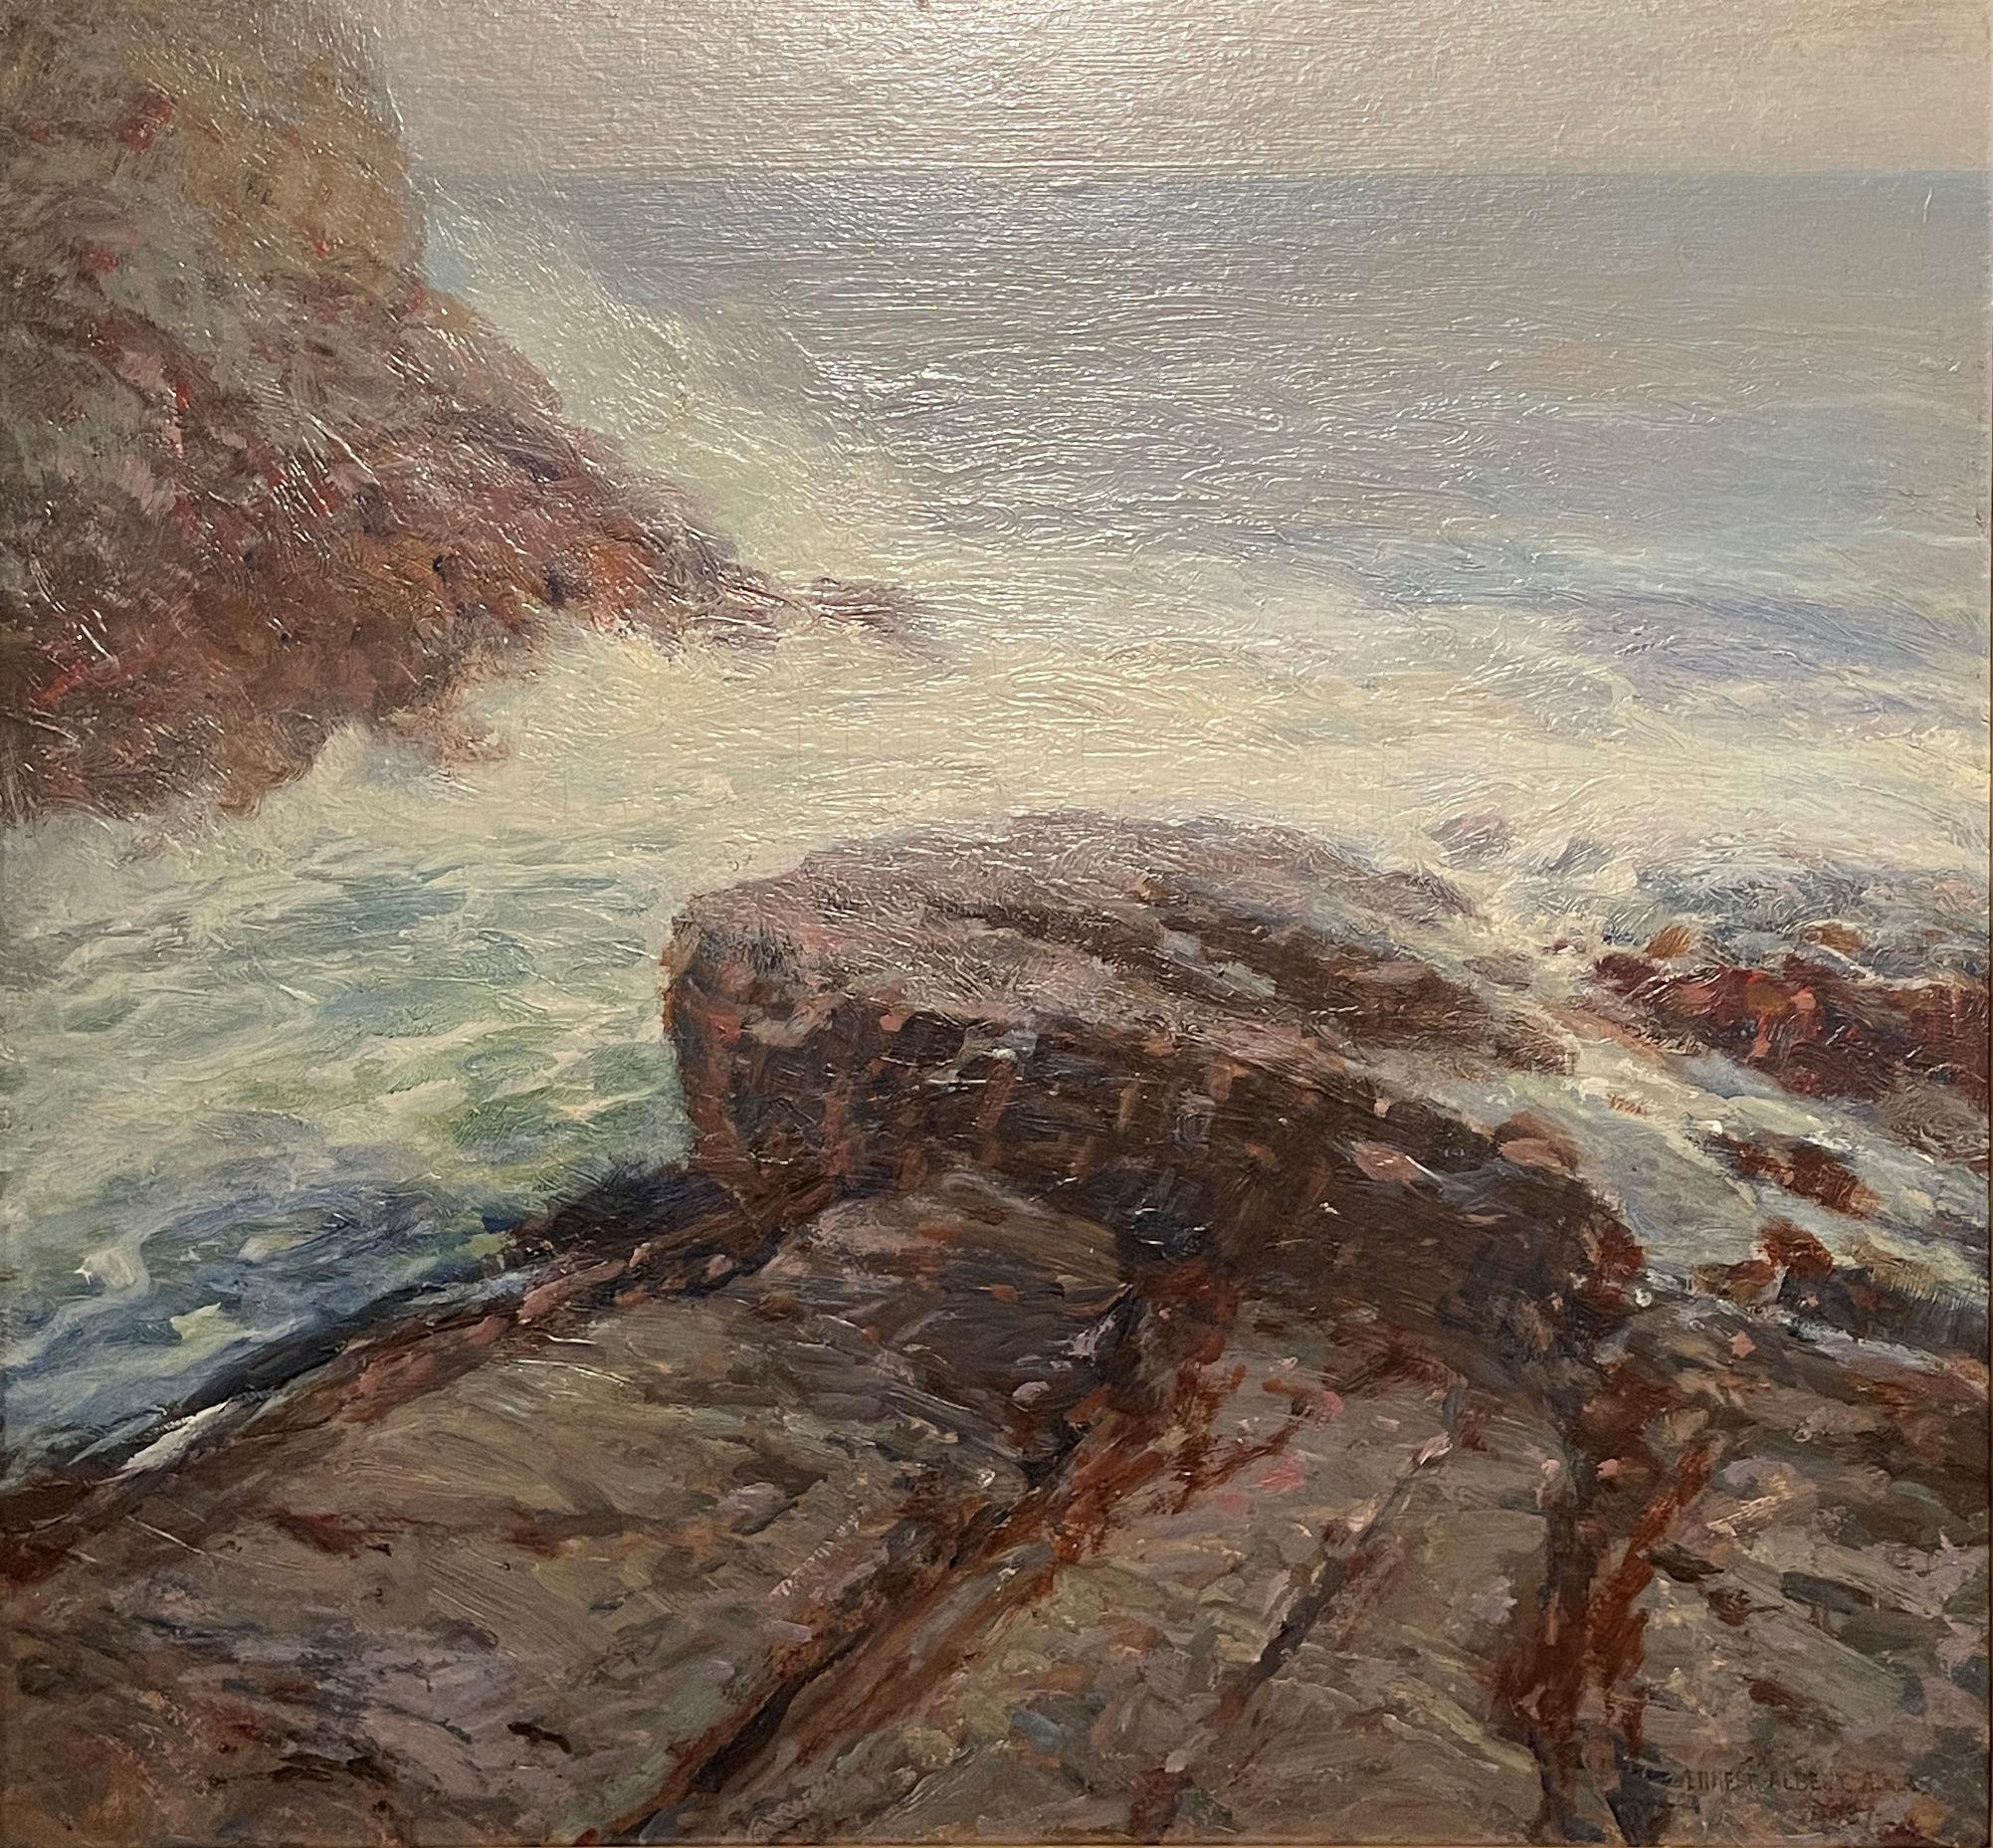 "Maine Coast, Ogunquit, " Ernest Albert, American Impressionism, Seascape